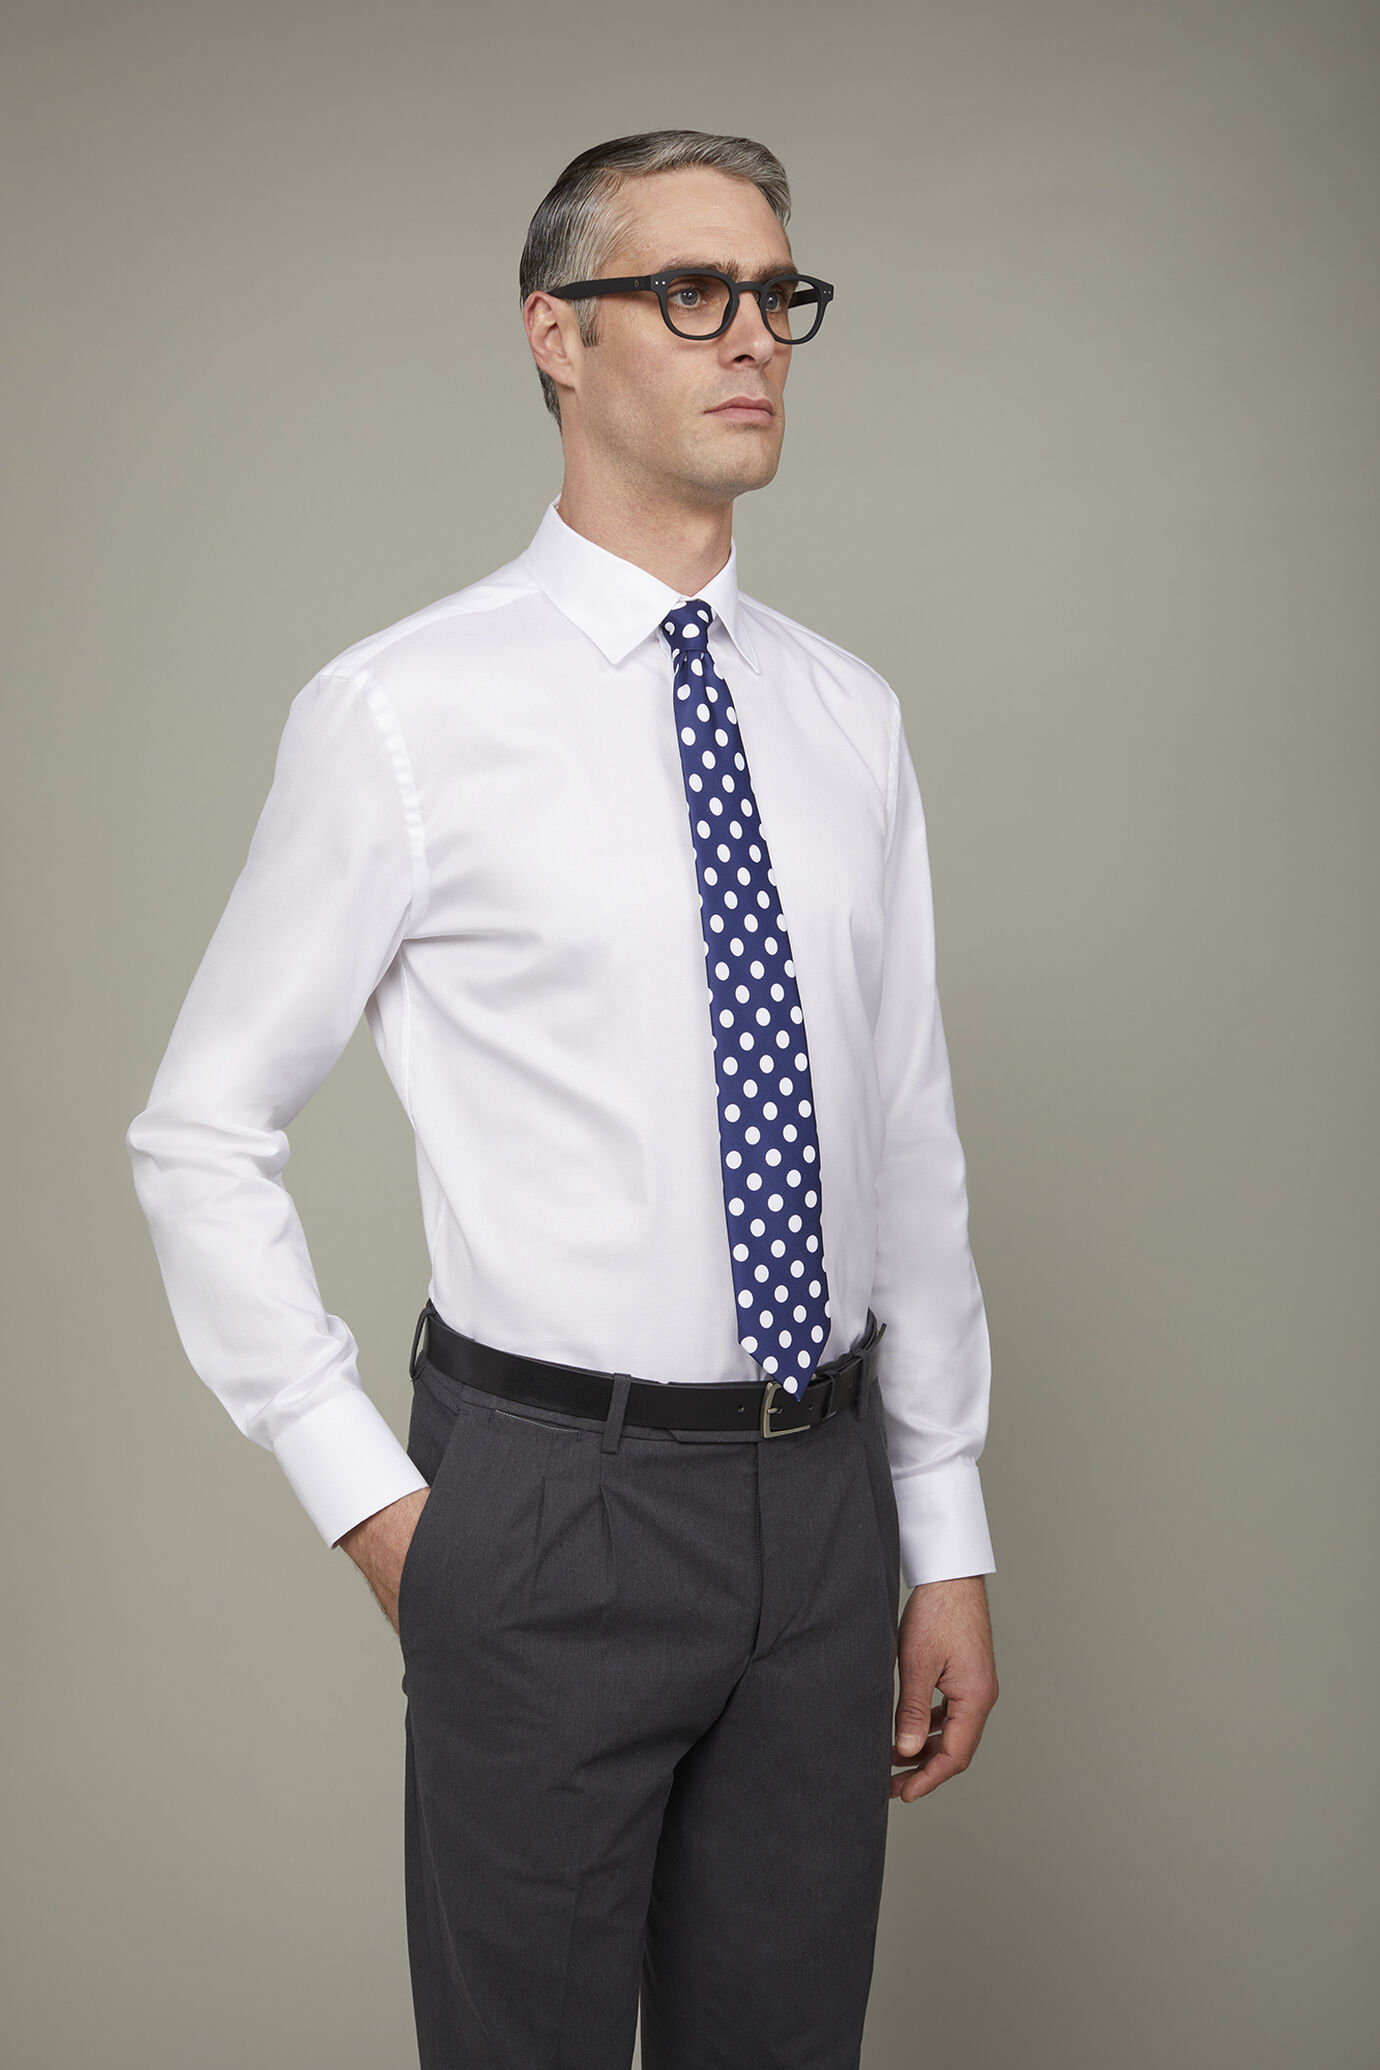 Men's shirt classic collar 100% cotton lightweight oxford fabric regular fit image number 2